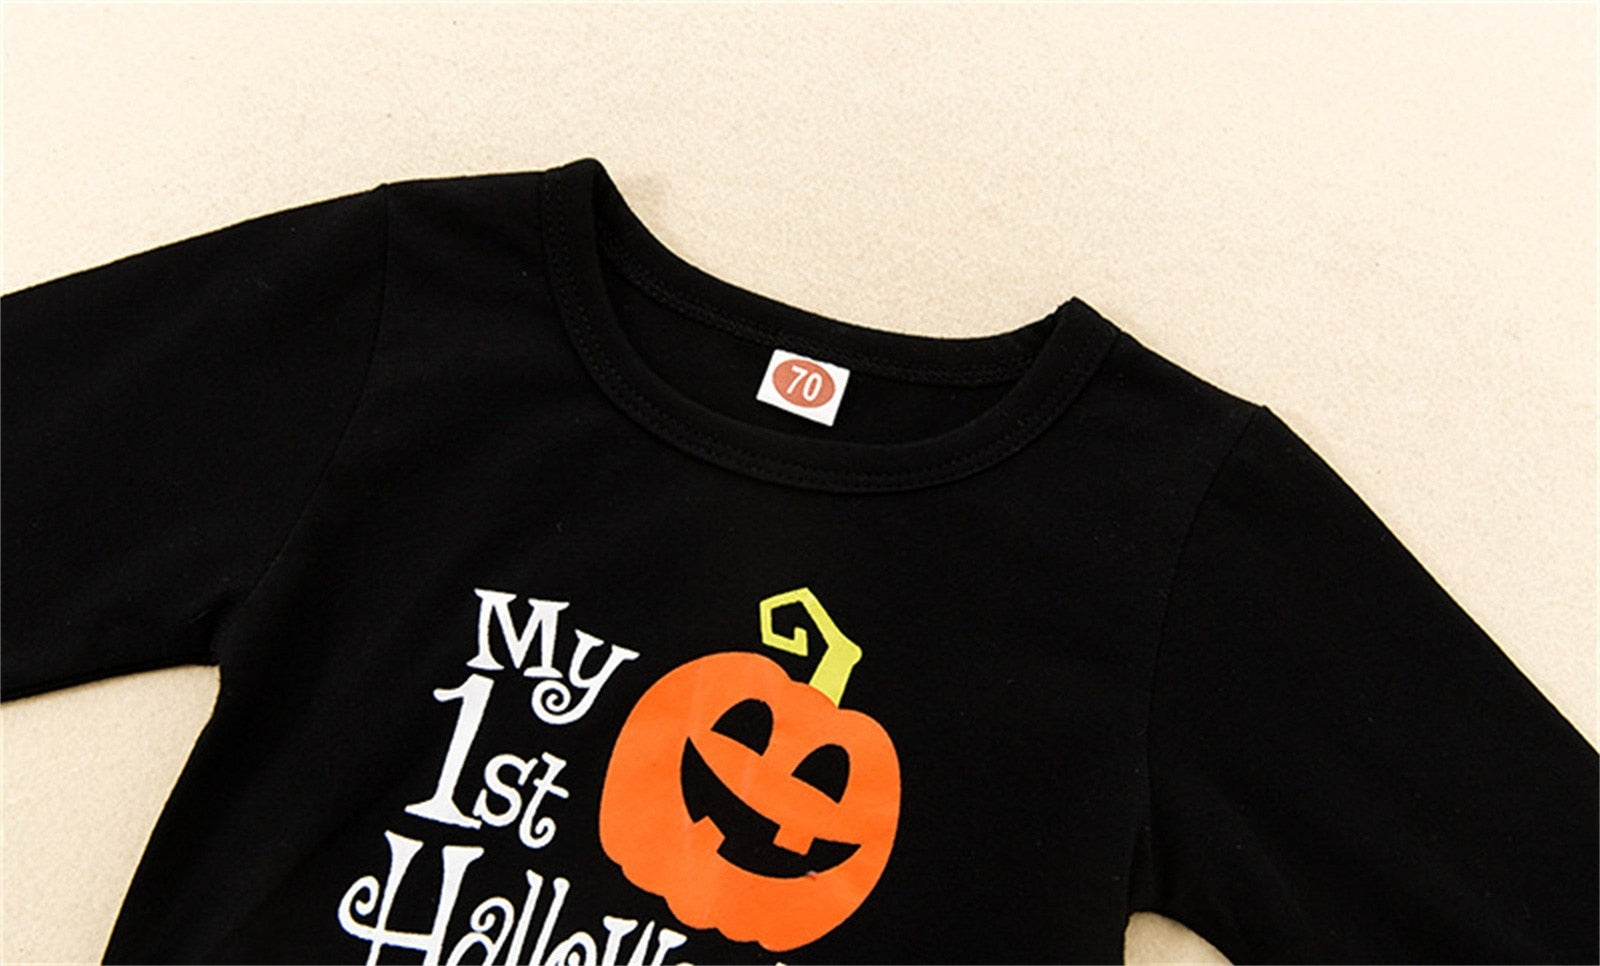 Newborn Infant Unisex Halloween Pumpkin Outfits Long Sleeve Romper Tops, Long Pants, Hats outfit